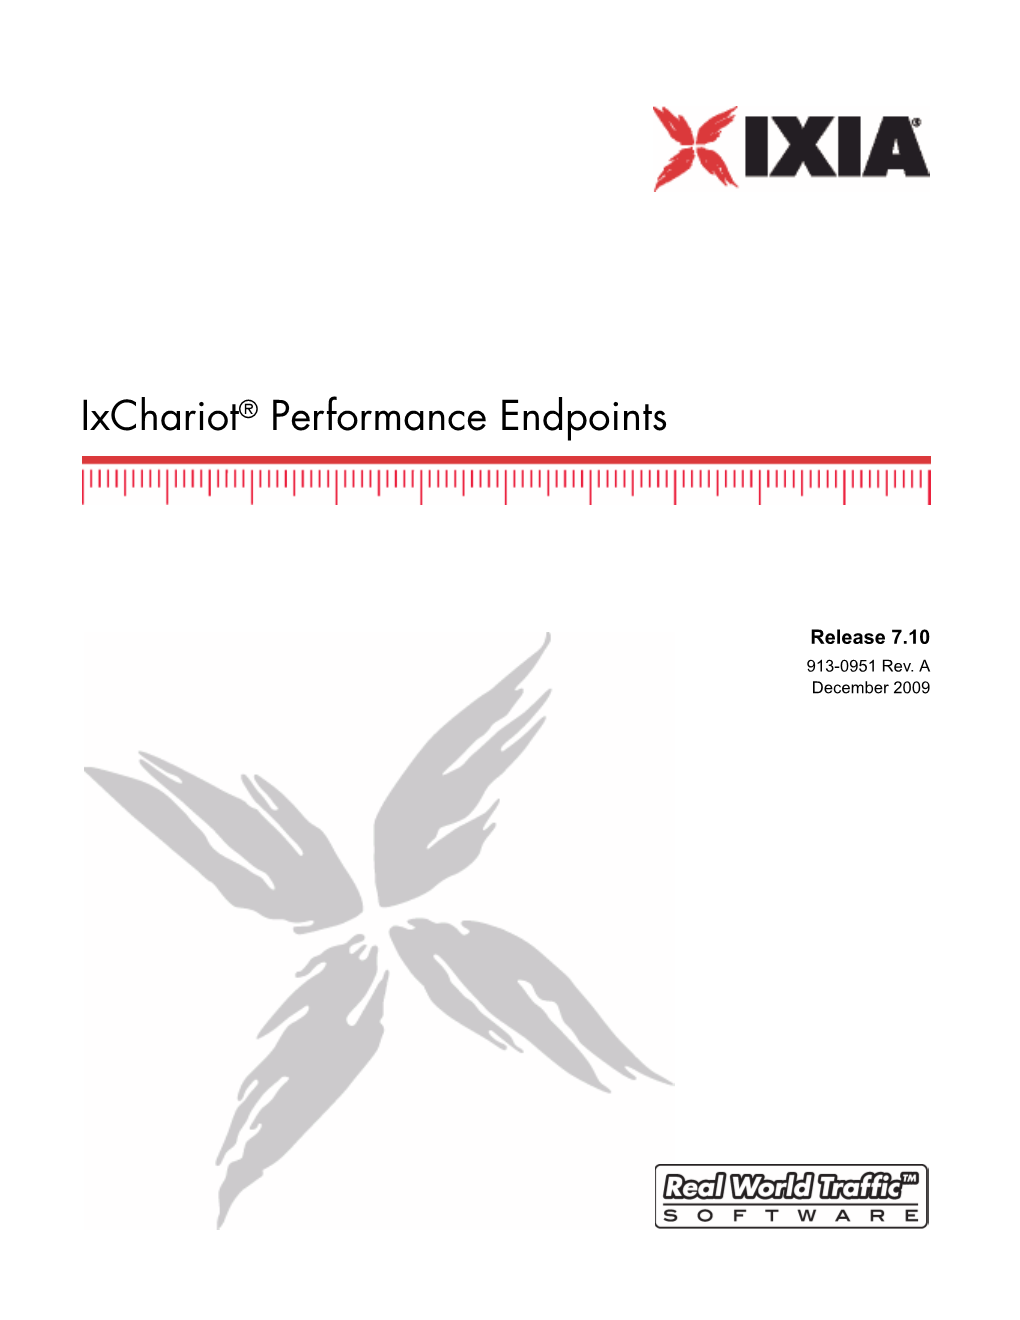 Ixchariot® Performance Endpoints